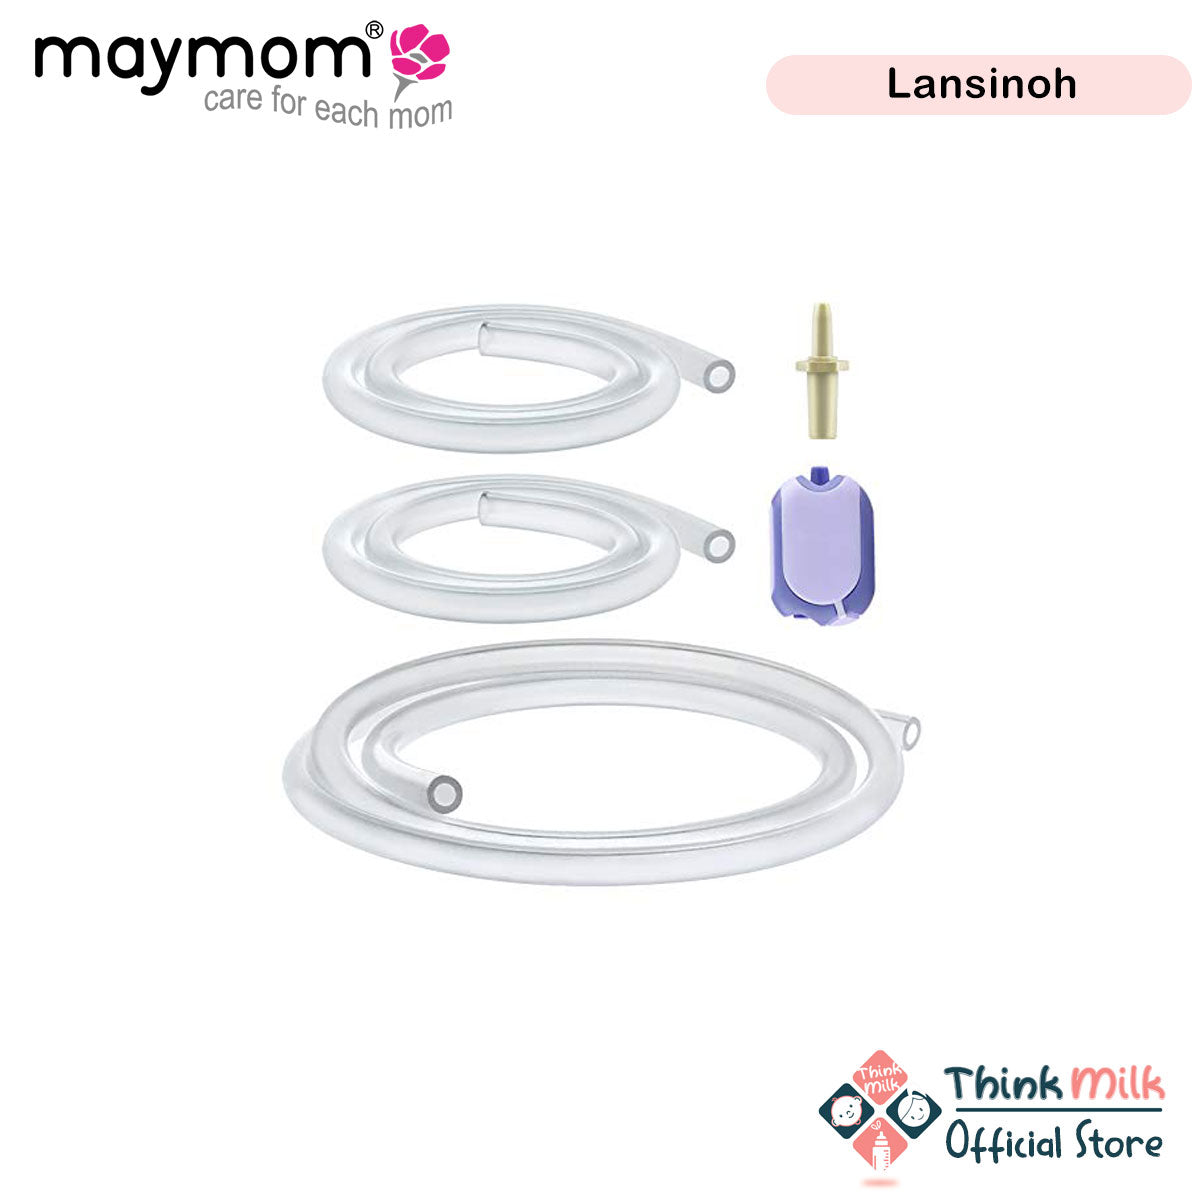 Maymom Tubing For Lansinoh Breast Pumps